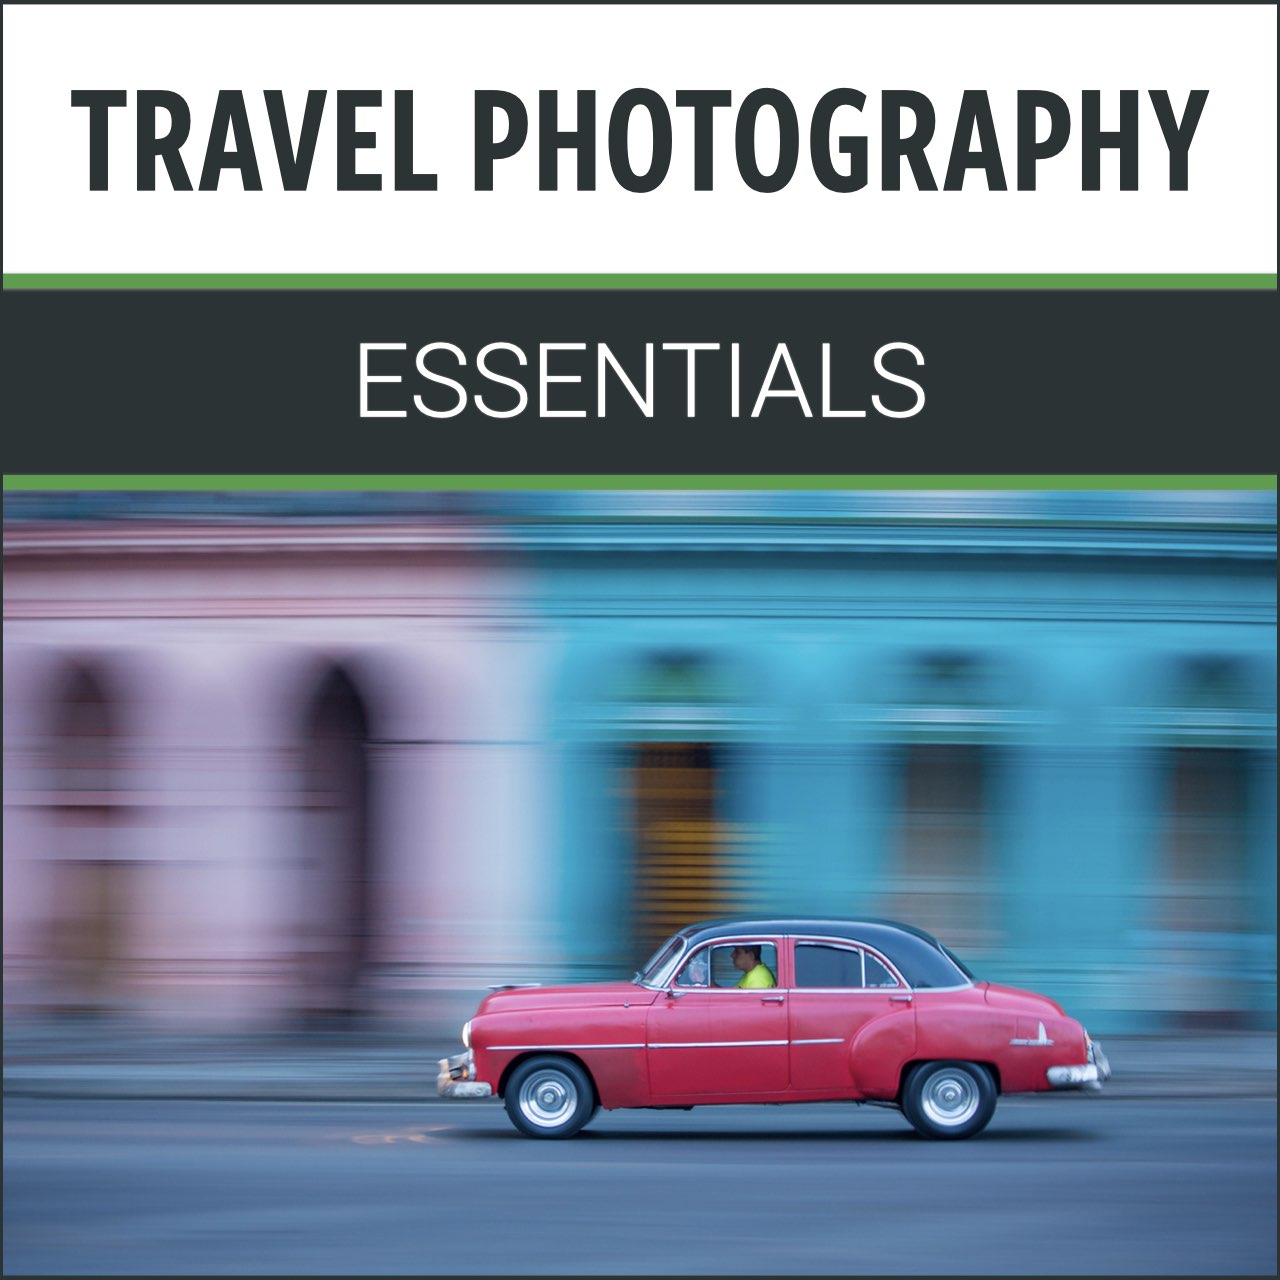 Travel Photography Essentials